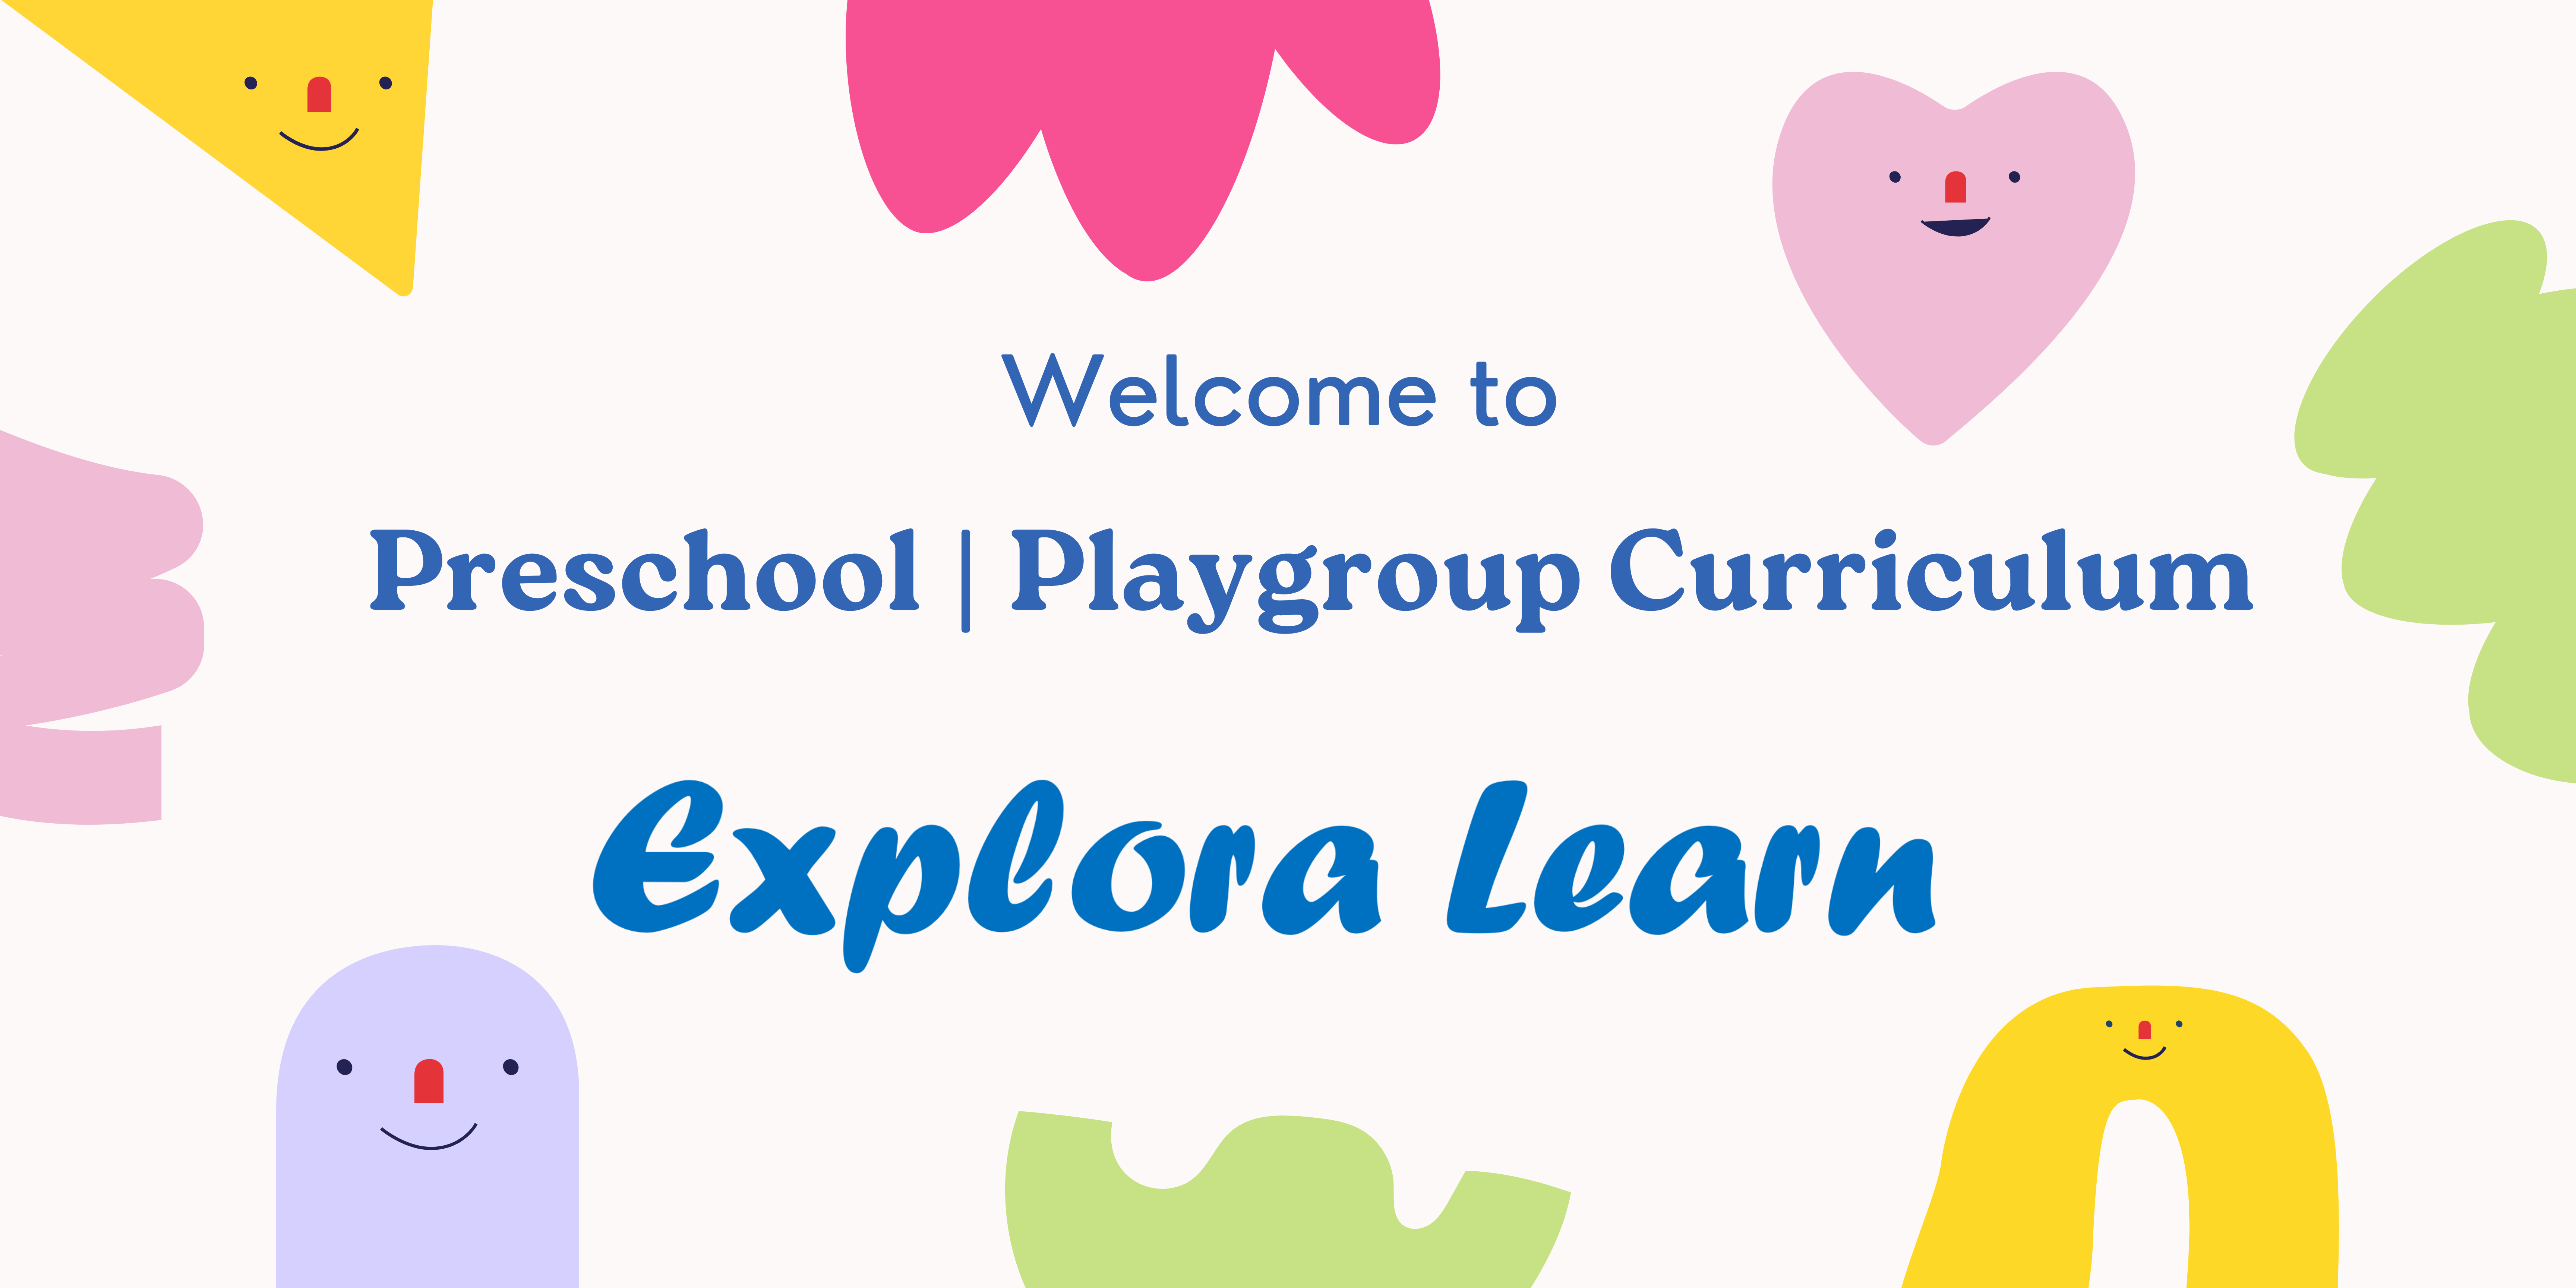 Complete Preschool | Playgroup Curriculum